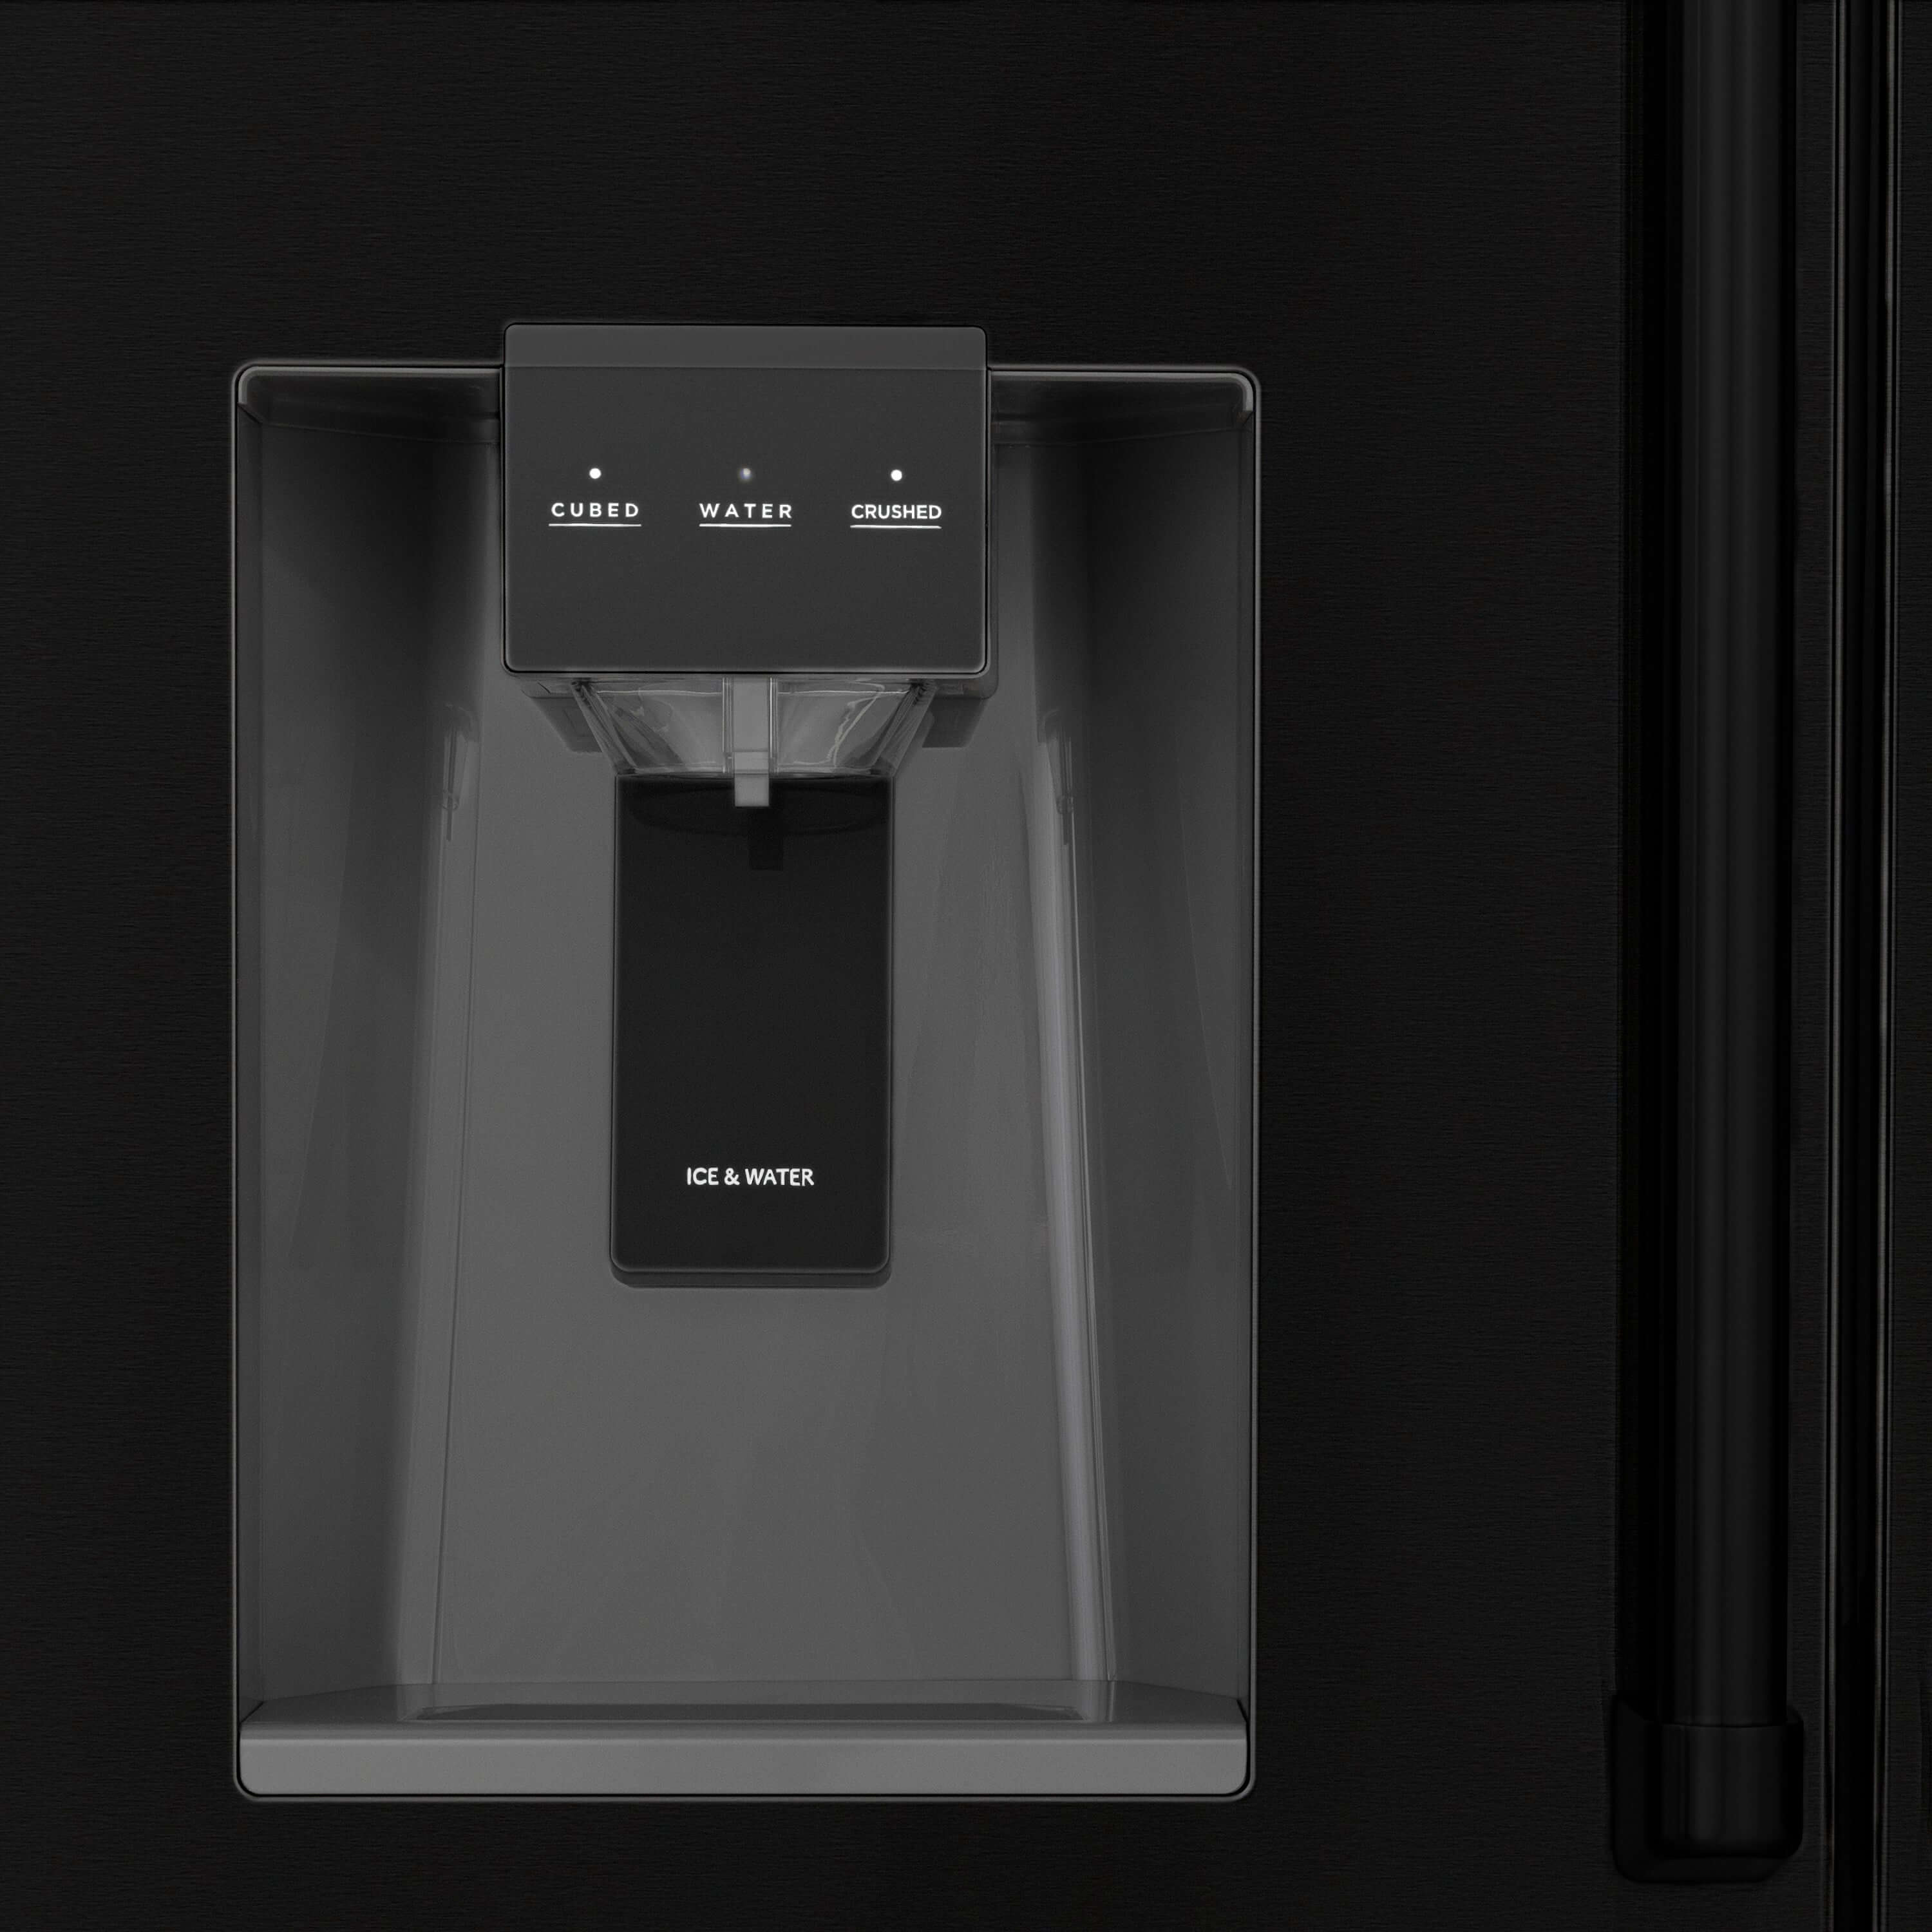 ZLINE black stainless steel French door refrigerator external water and ice dispenser.